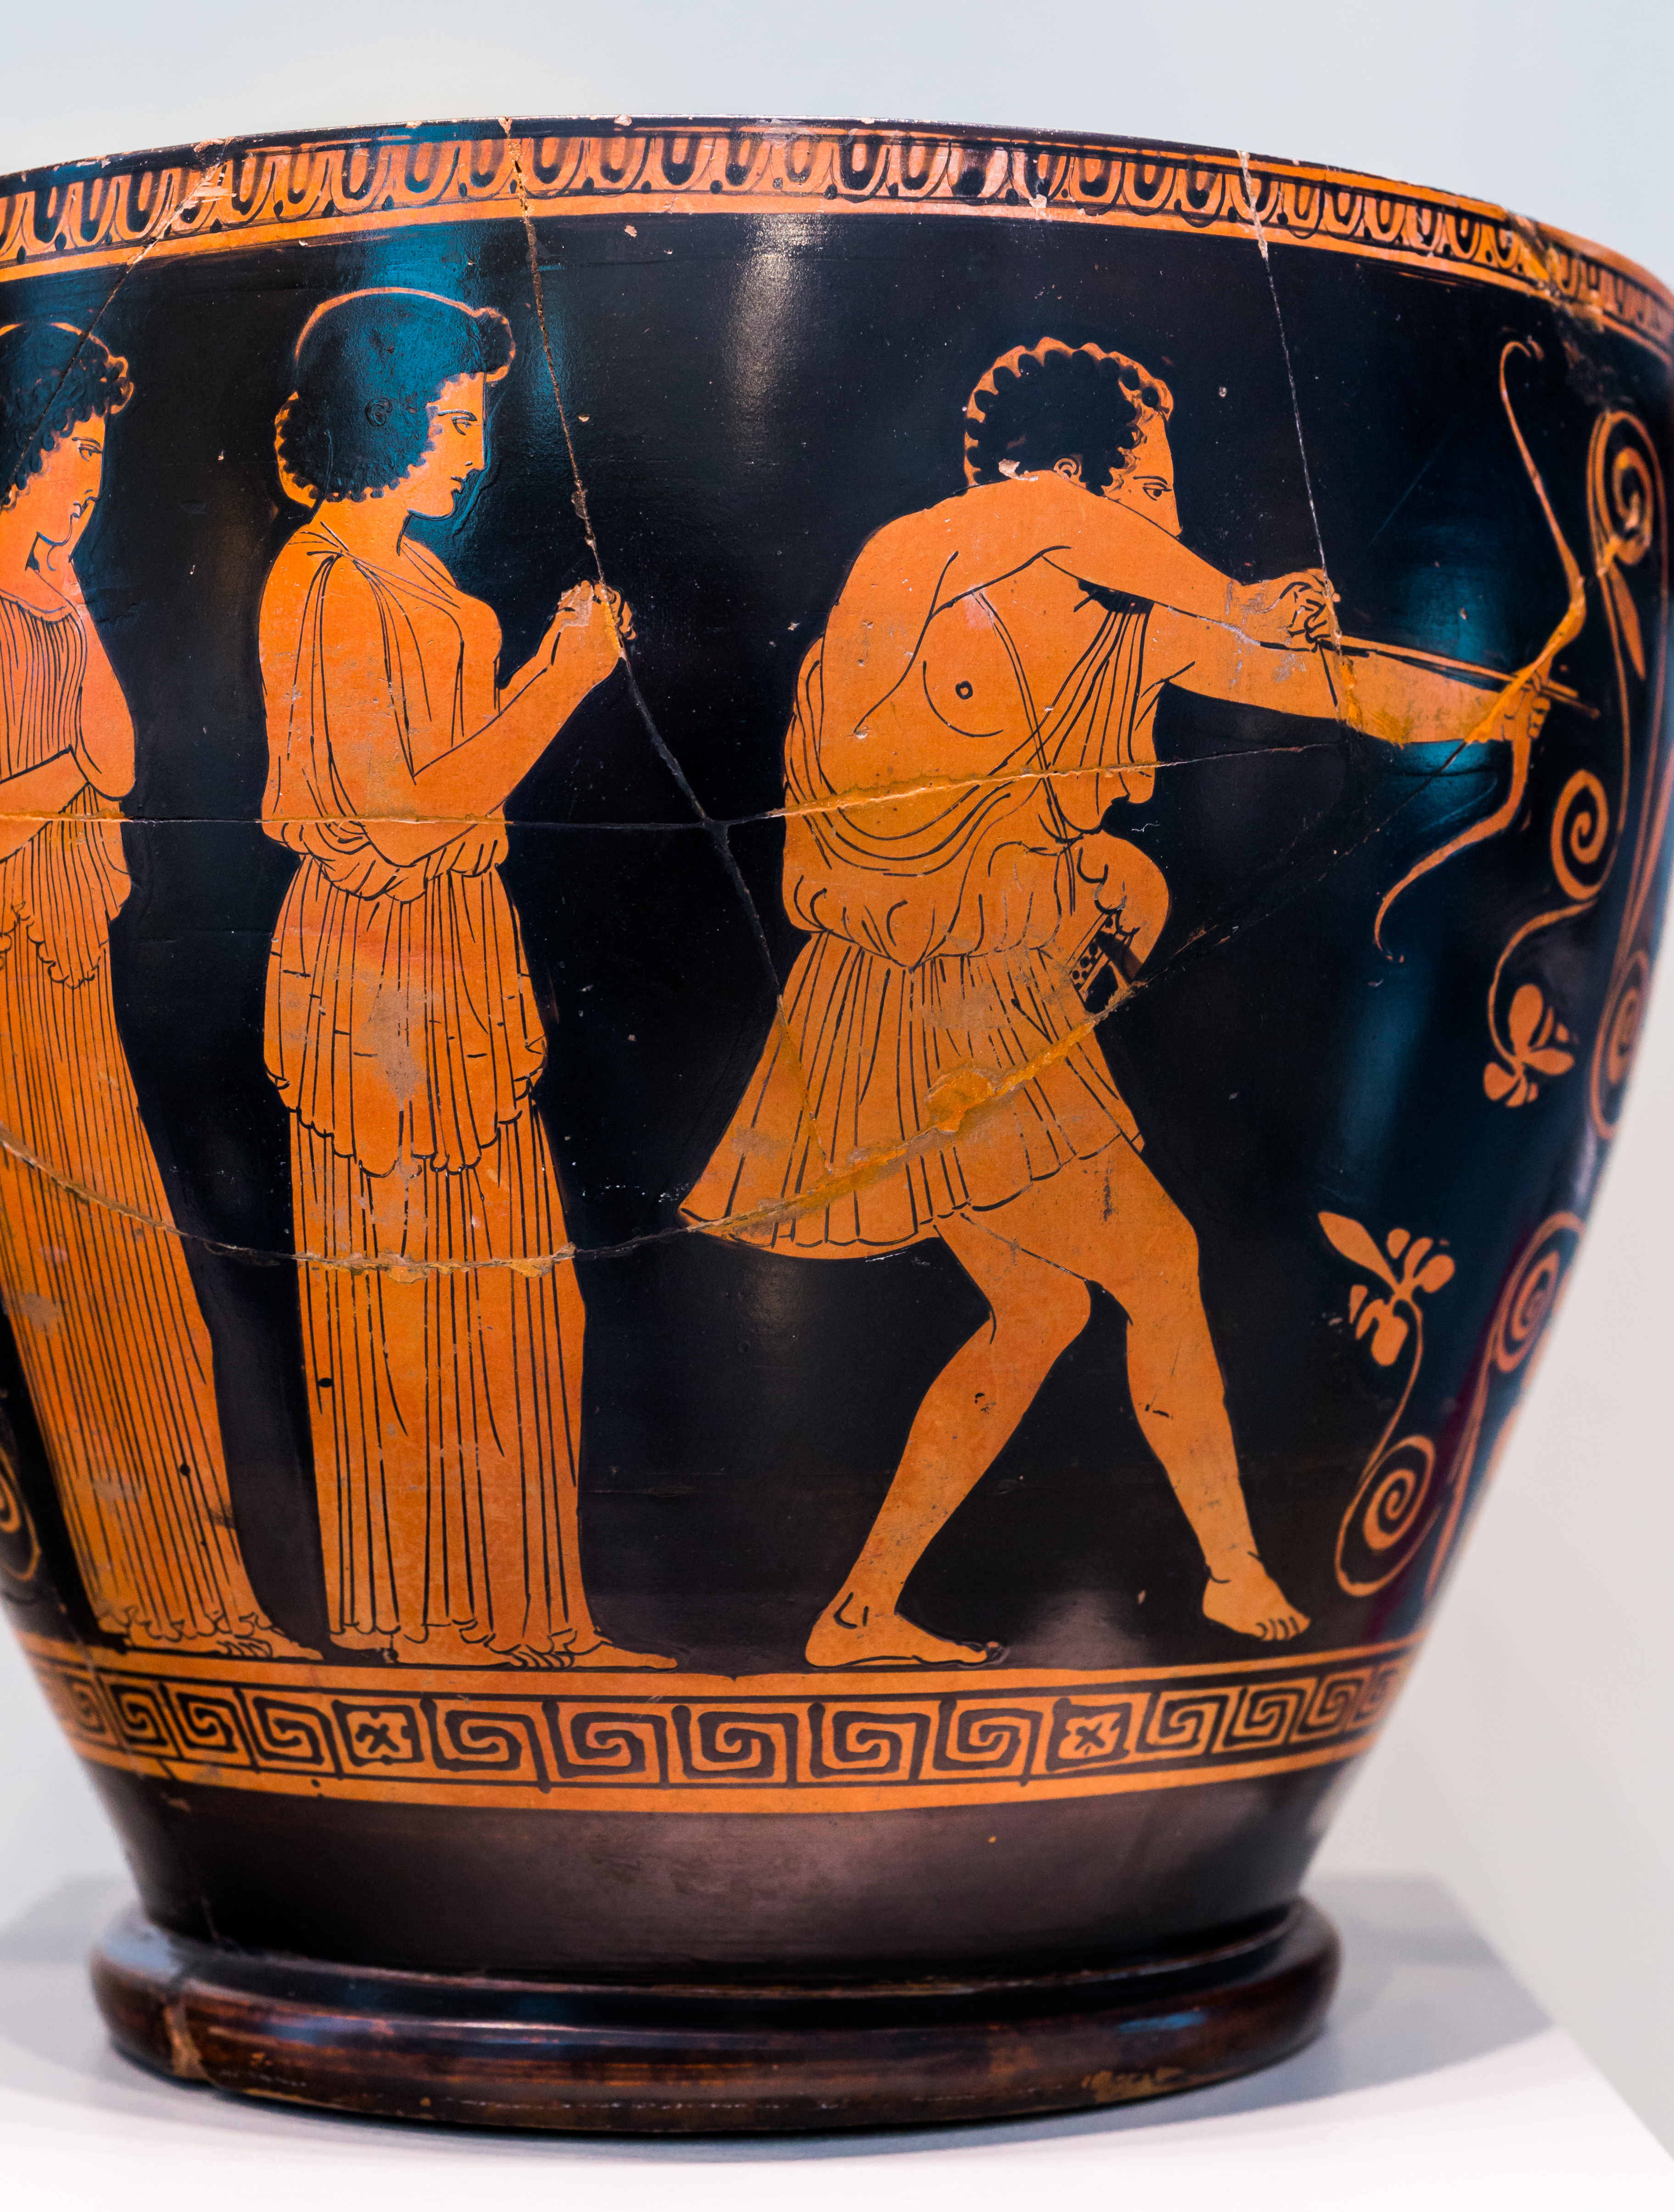 pelo Guión Seis File:Penelope Painter ARV 1300 1 Odysseus killing the suitors (04).jpg -  Wikimedia Commons